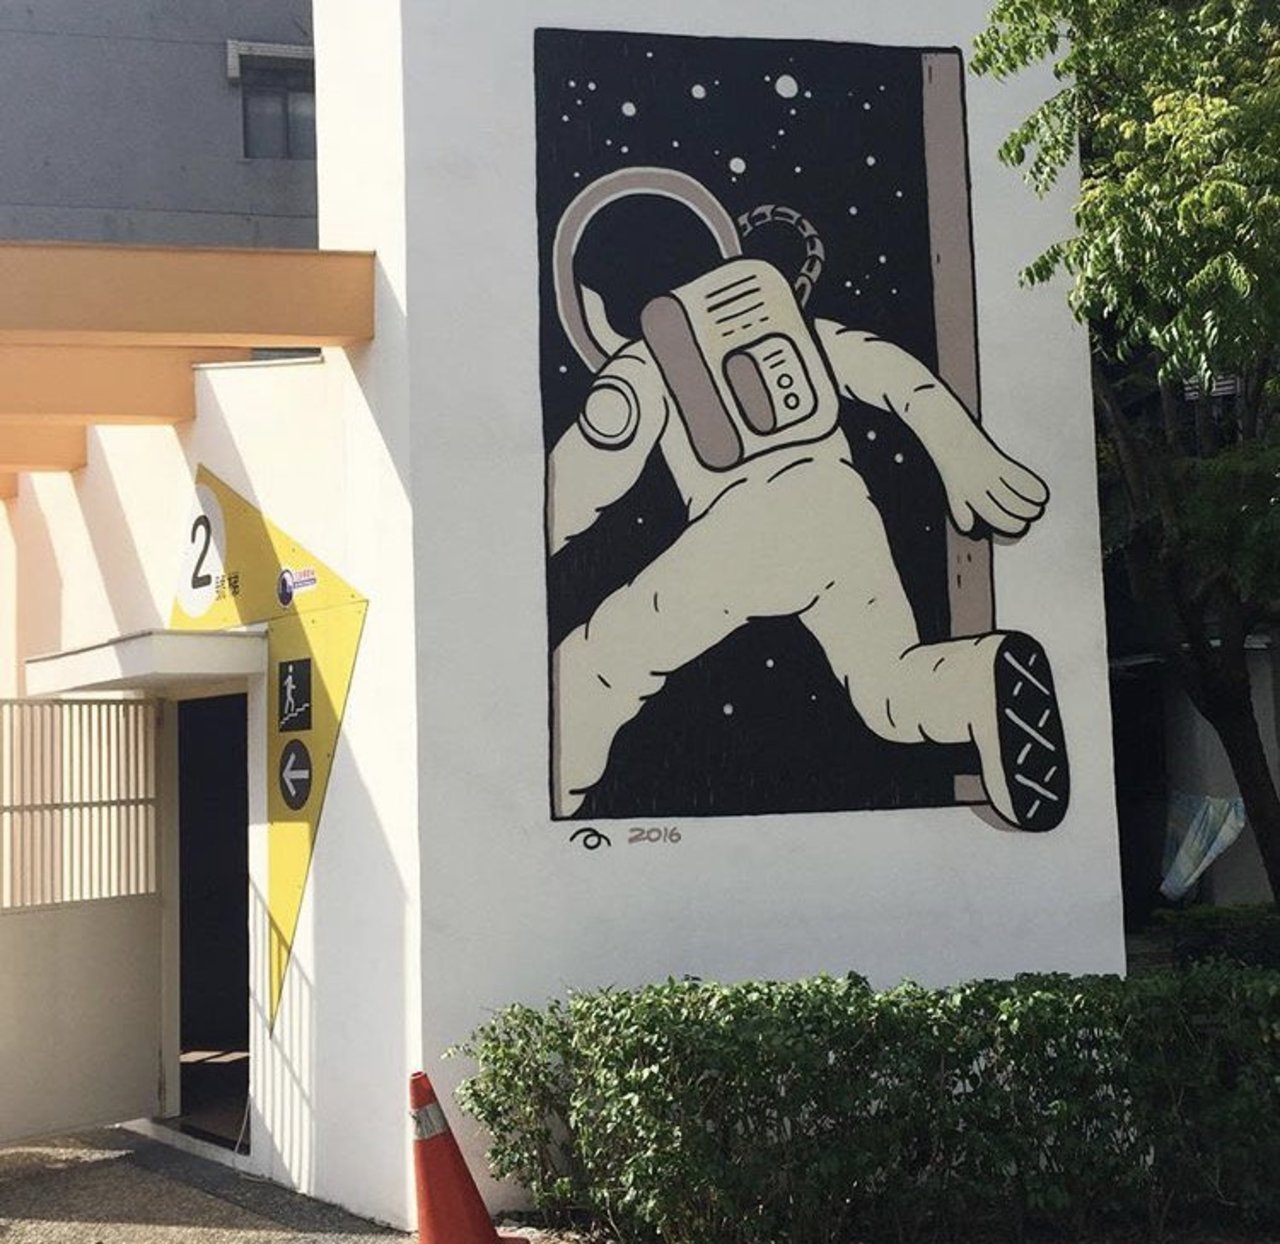 Something new from Muretz in Taiwan #streetart https://t.co/8r5KZJll9o